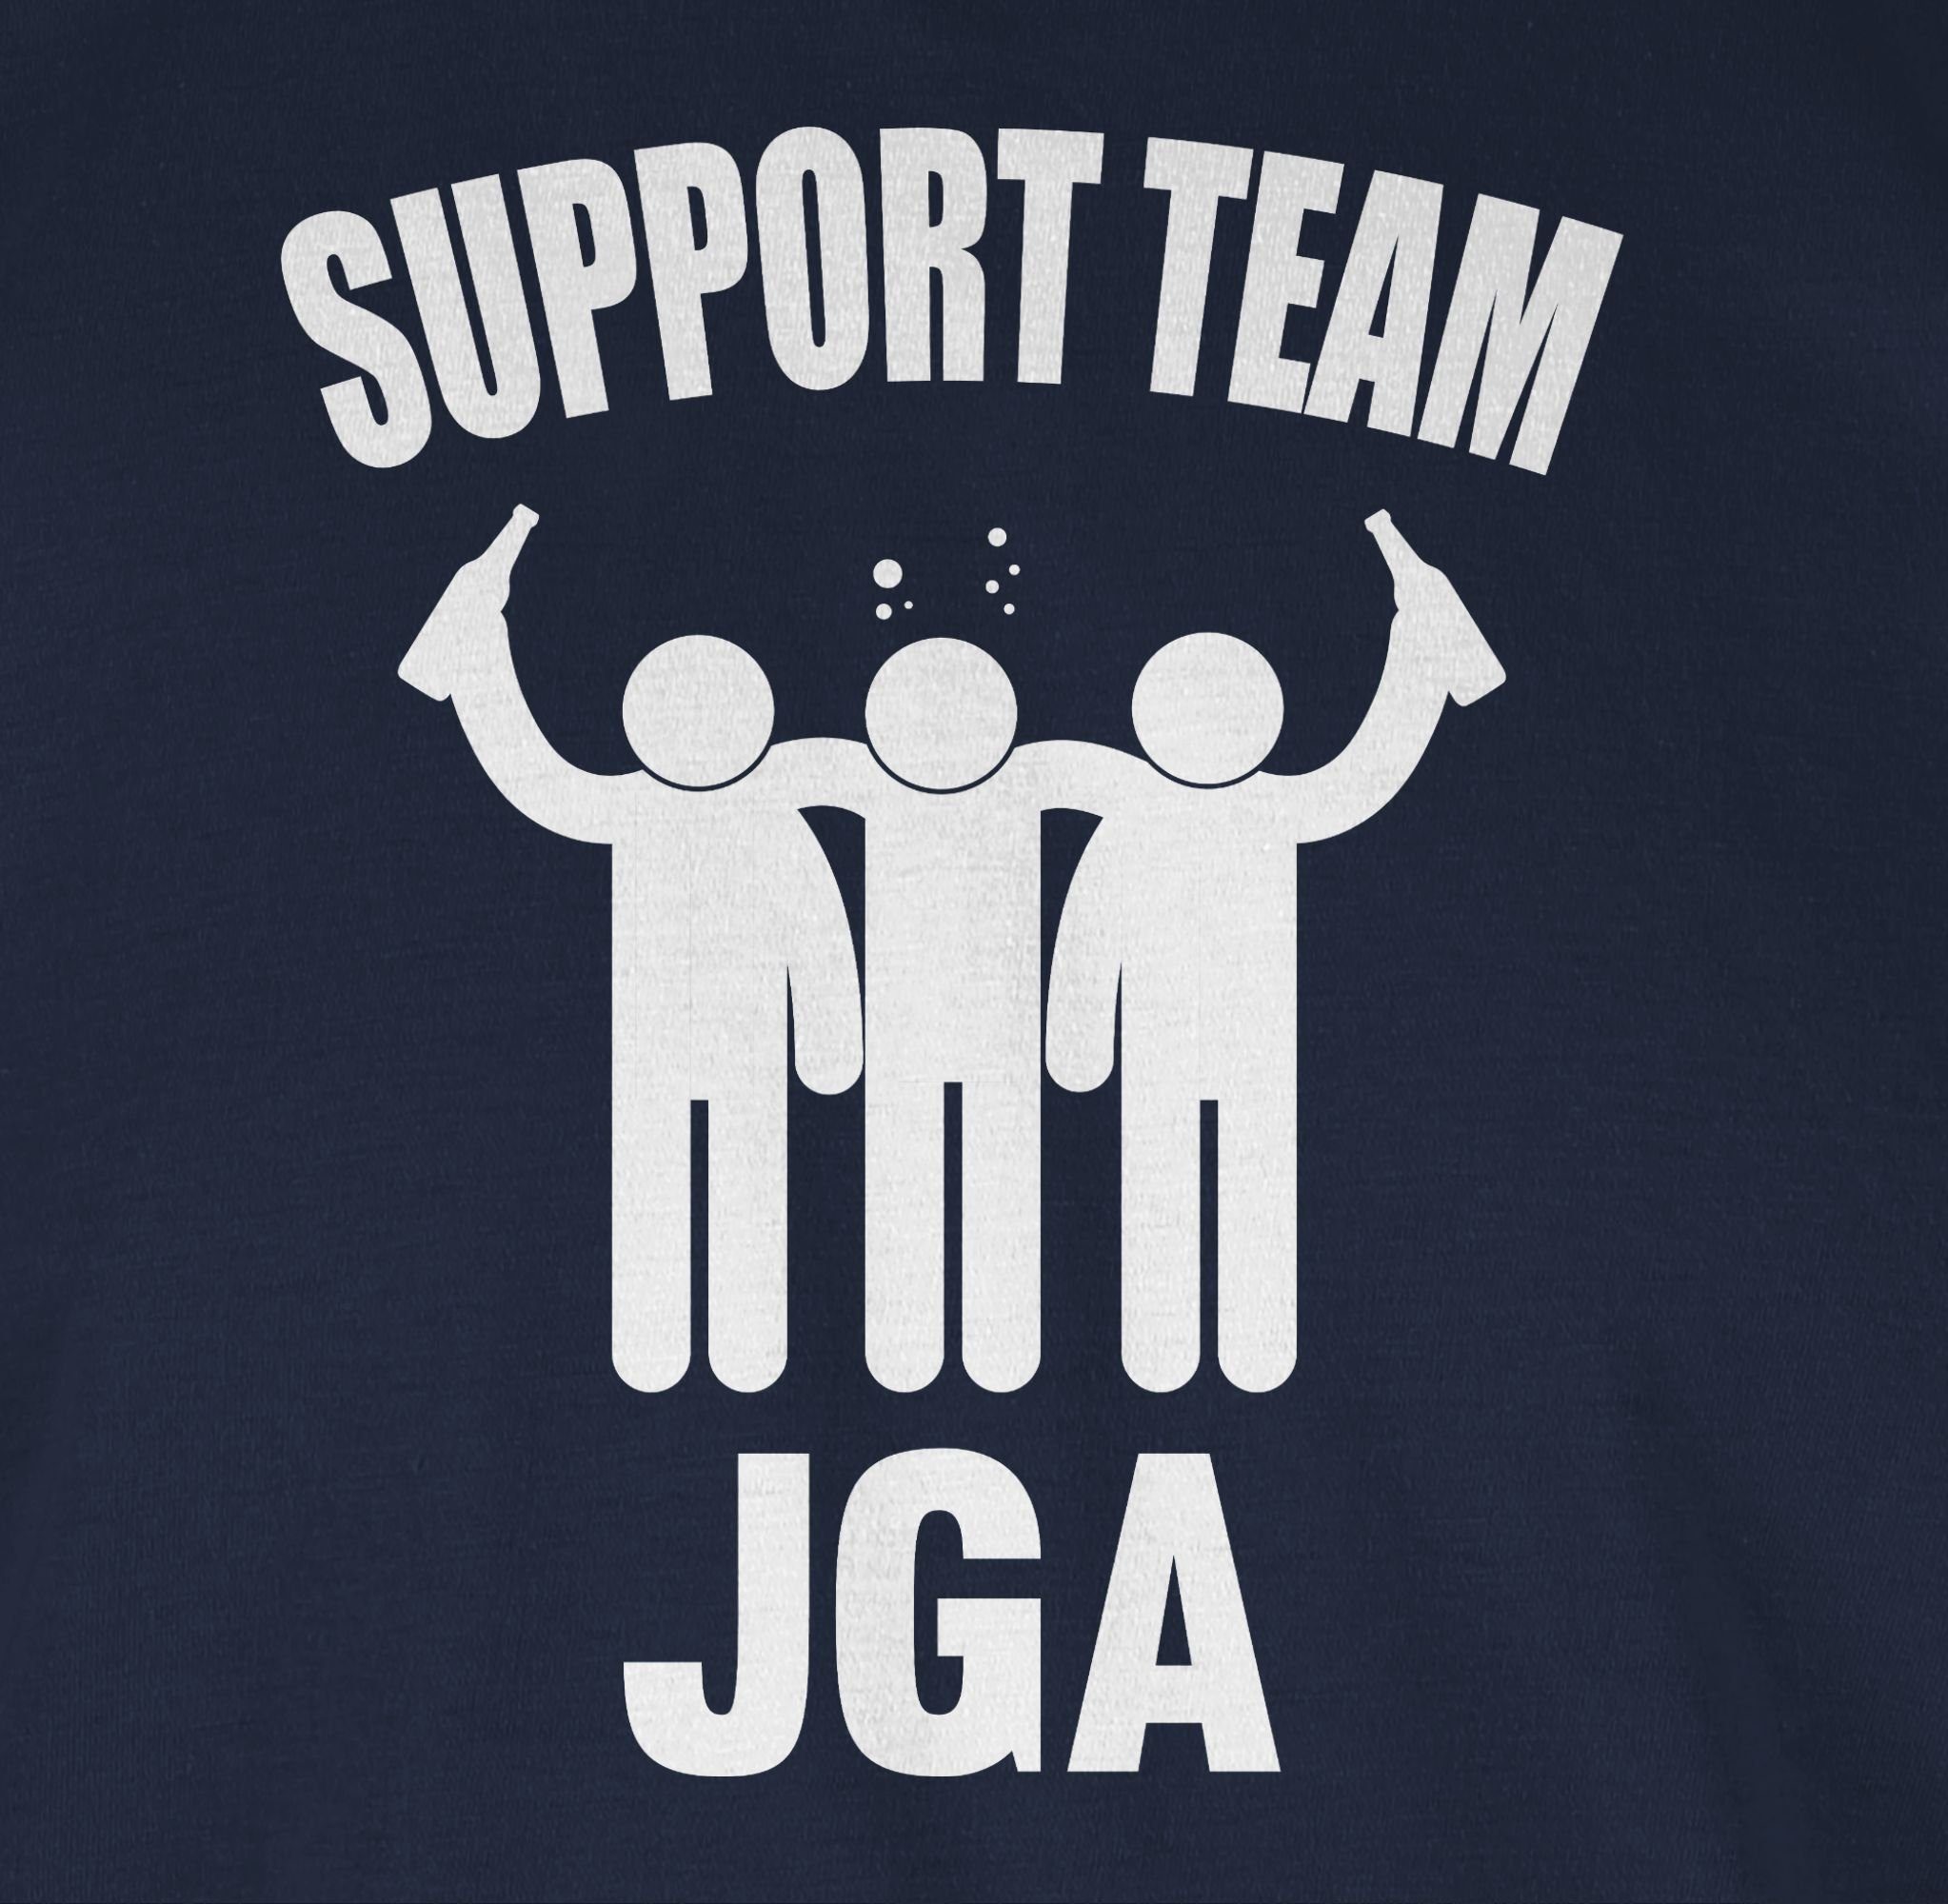 Shirtracer T-Shirt Crew Blau Groom JGA - Männer Support 3 Navy Team